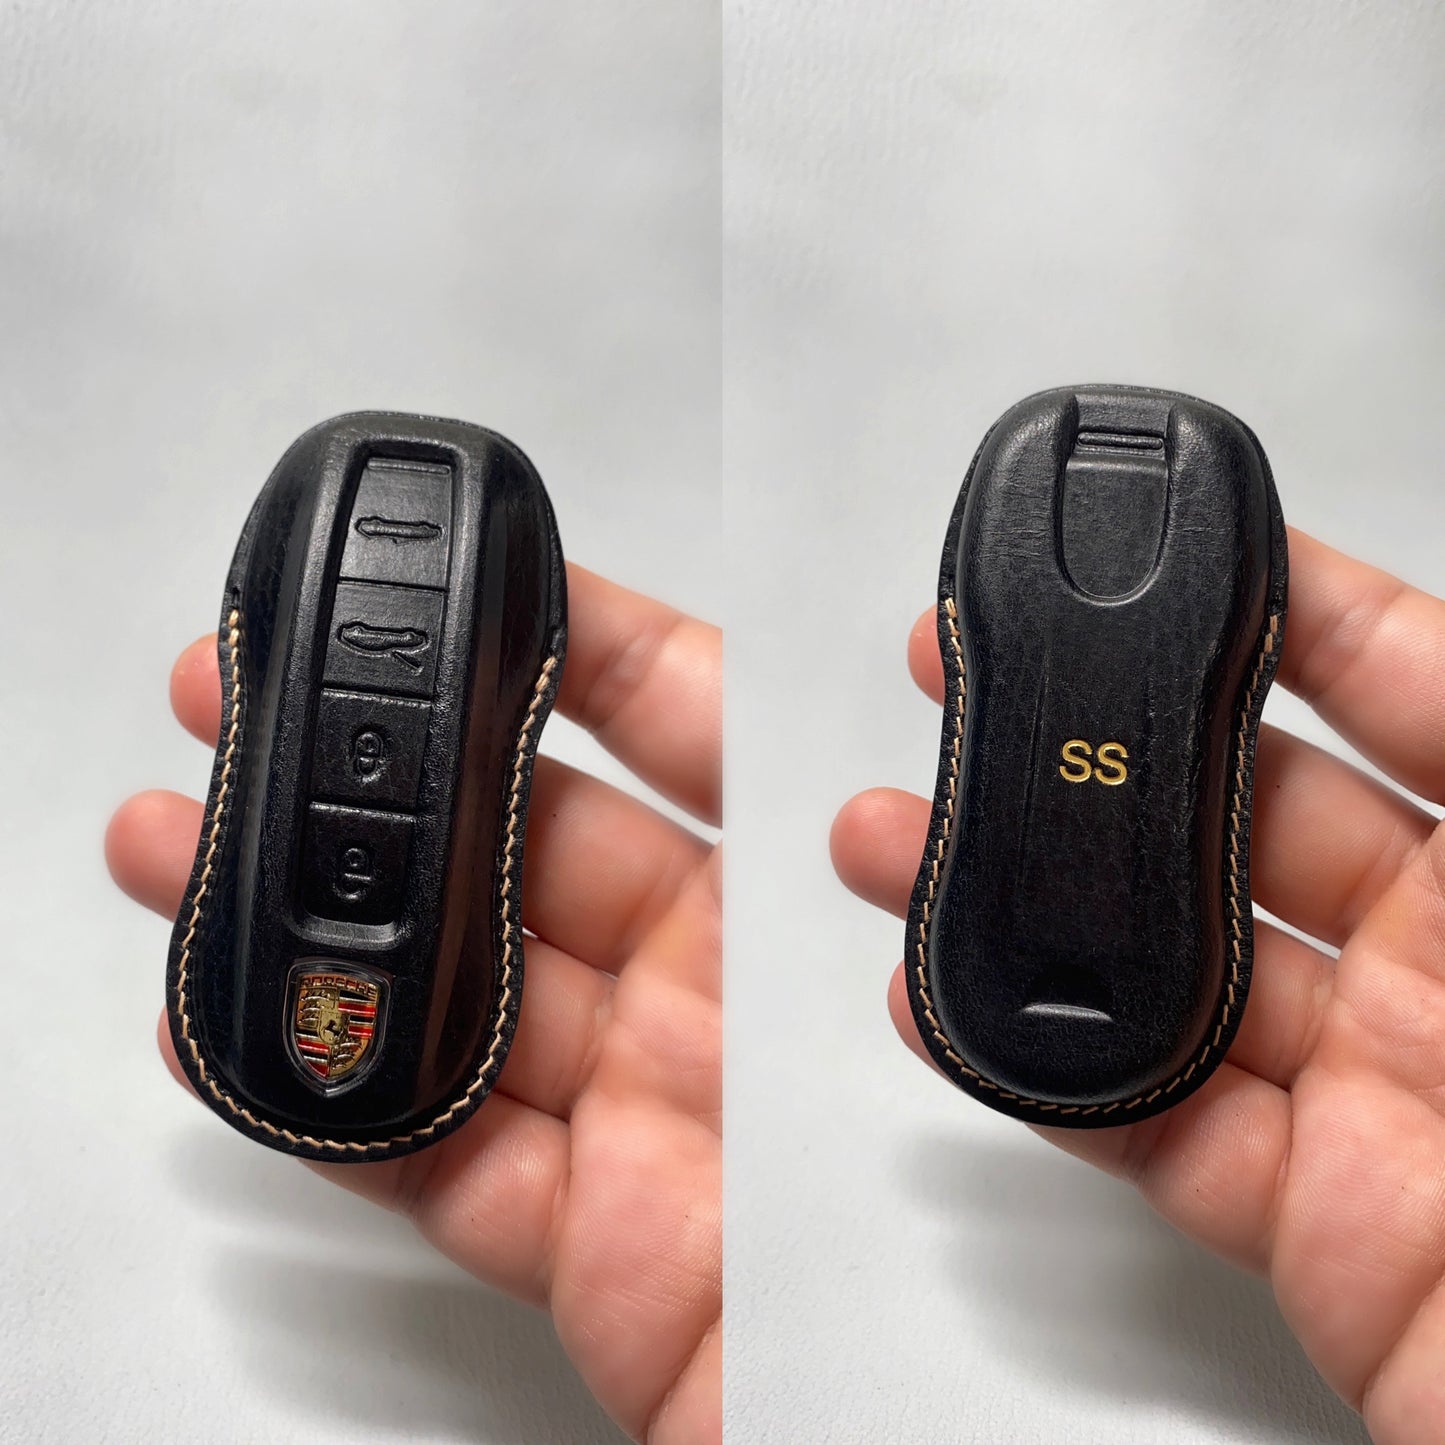 Porsche car key